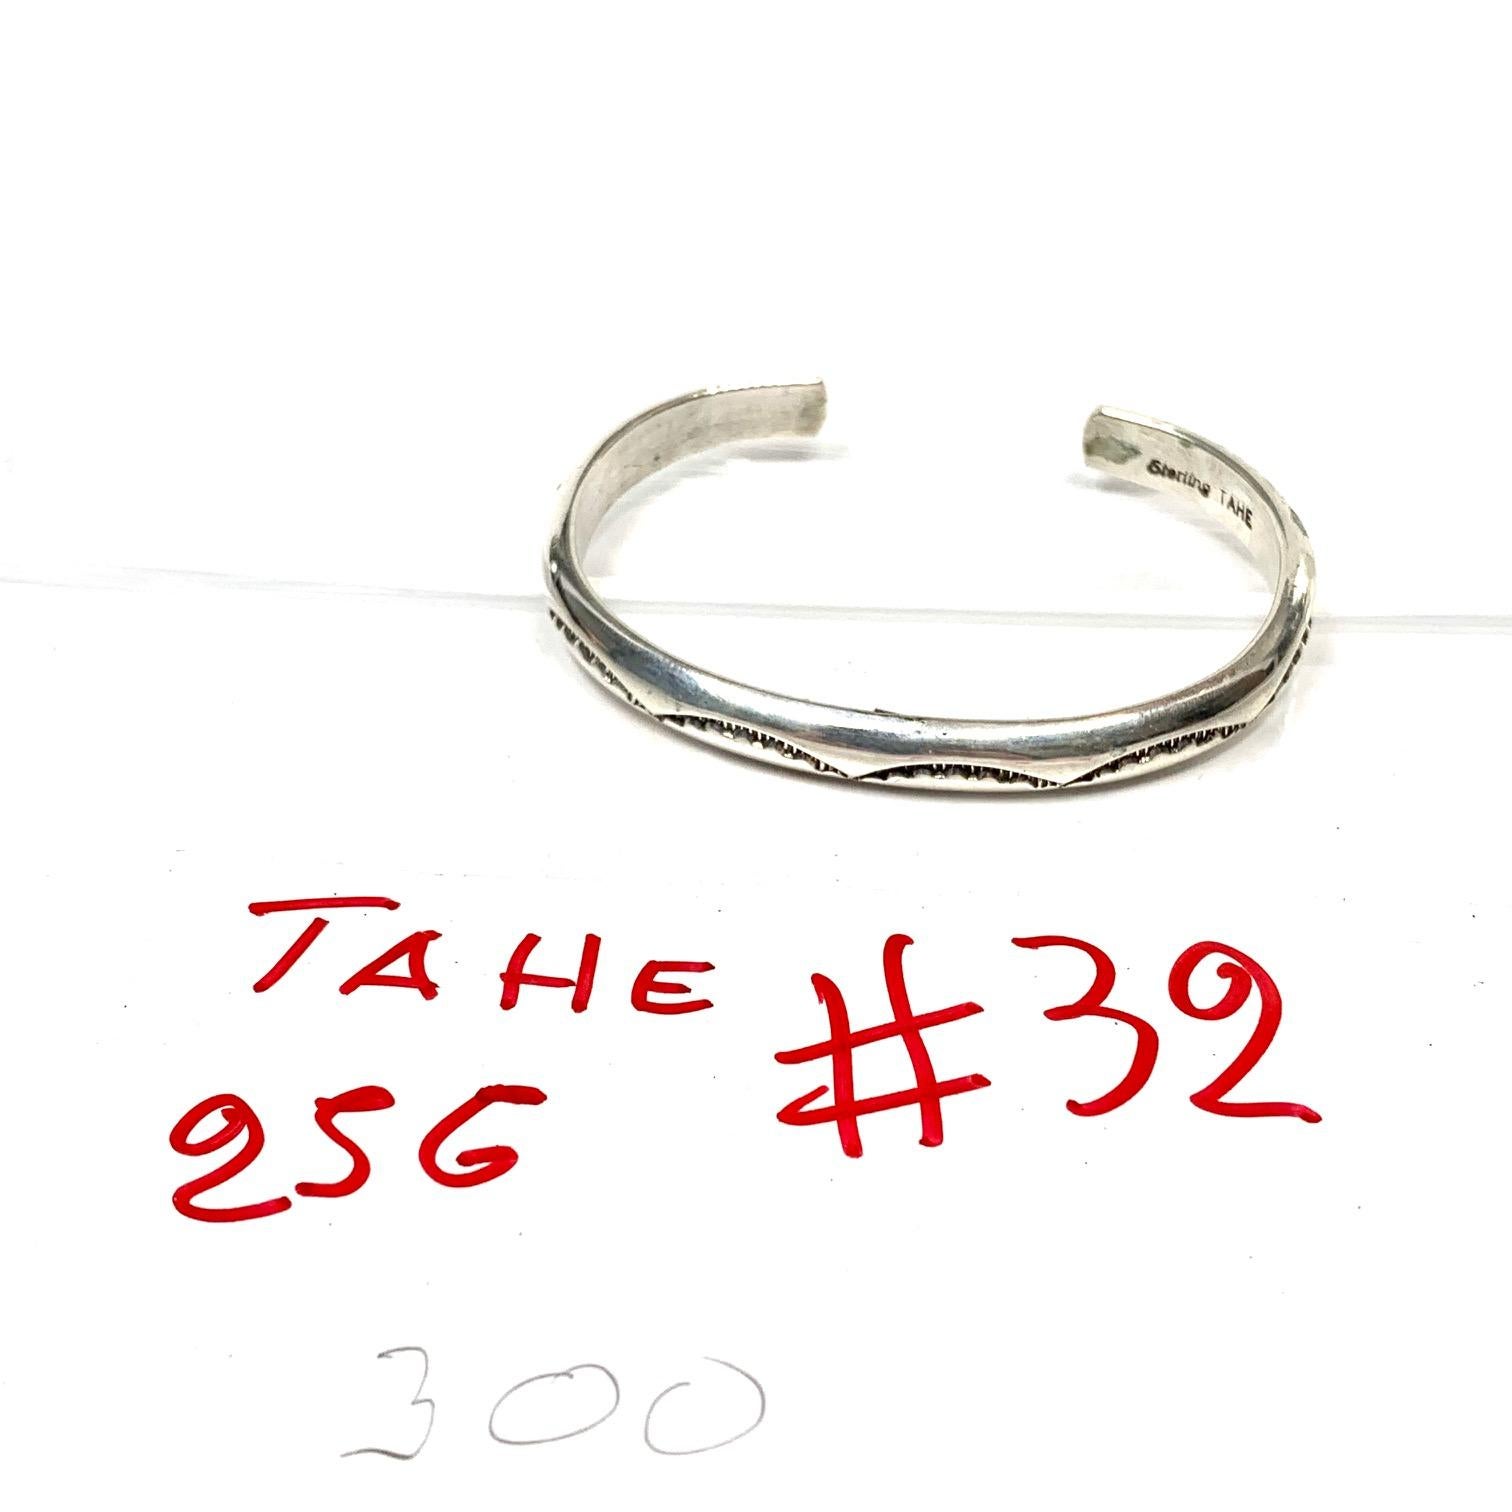 Navajo Sterling Silver 25 Gr. Cuff Bracelet By TAHE PS32 2